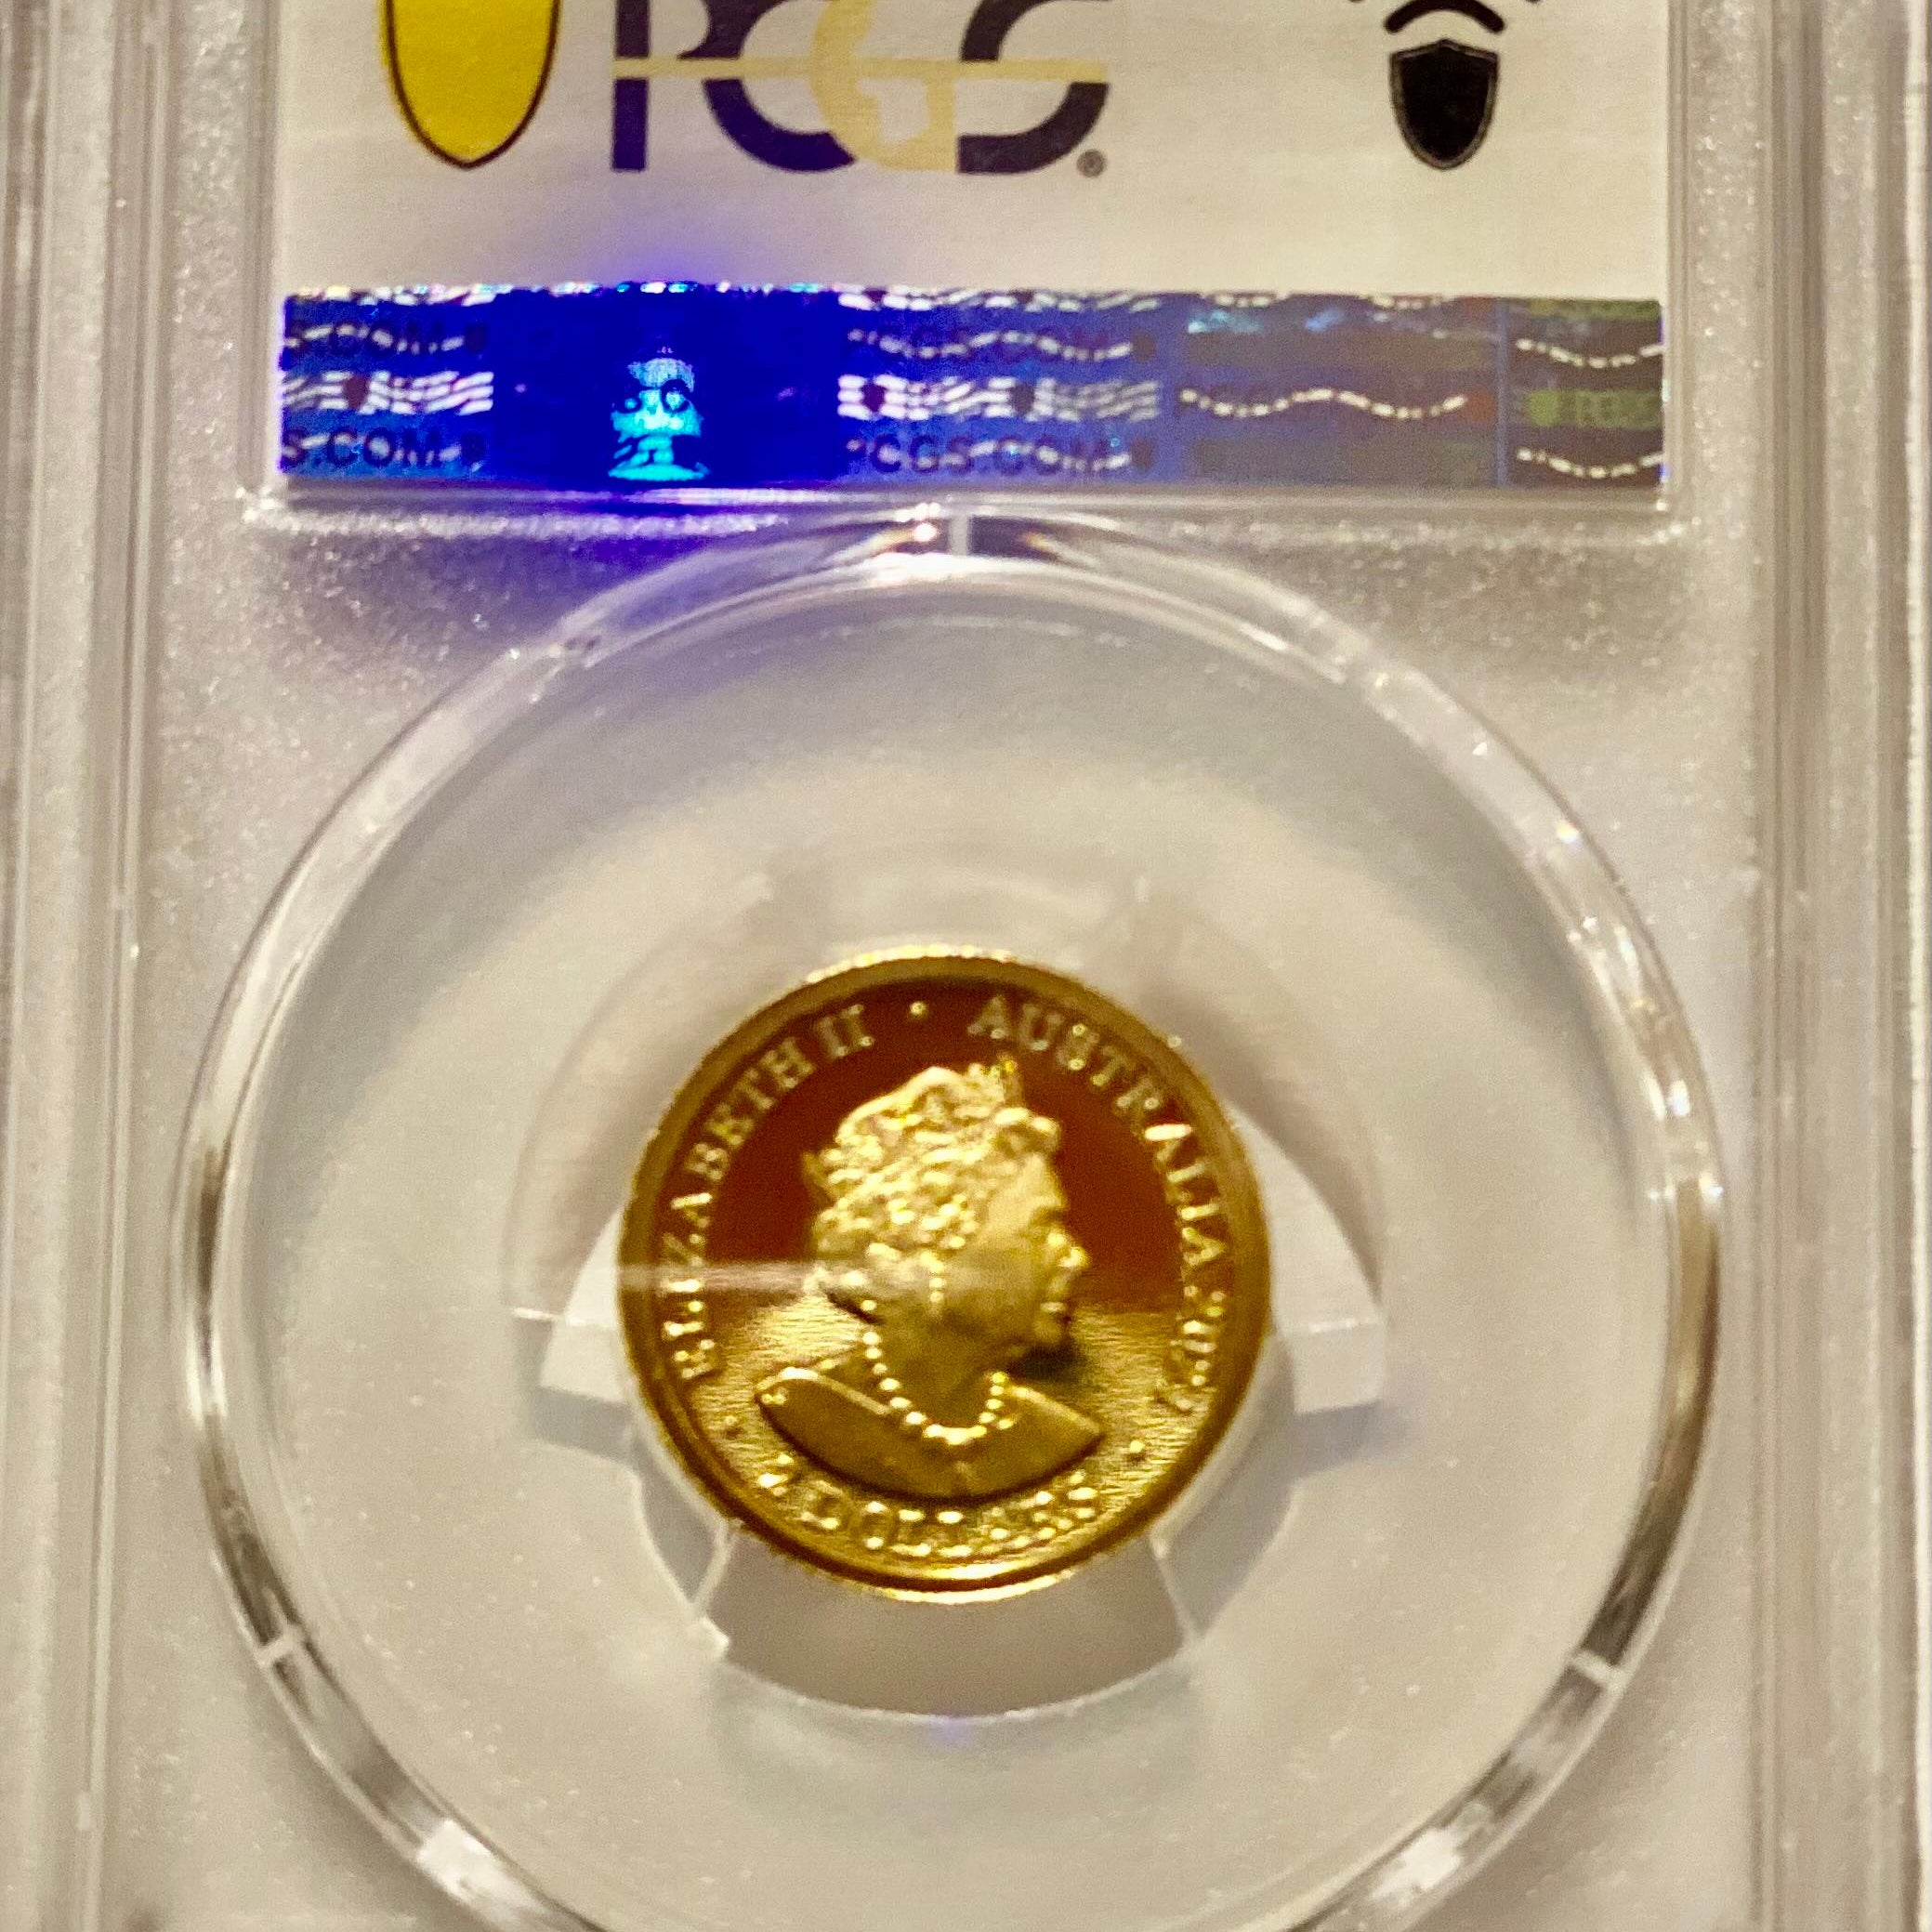 Royal Australian Mint 2021 Aboriginal Flag $2 Coin - PCGS PR70DCAM